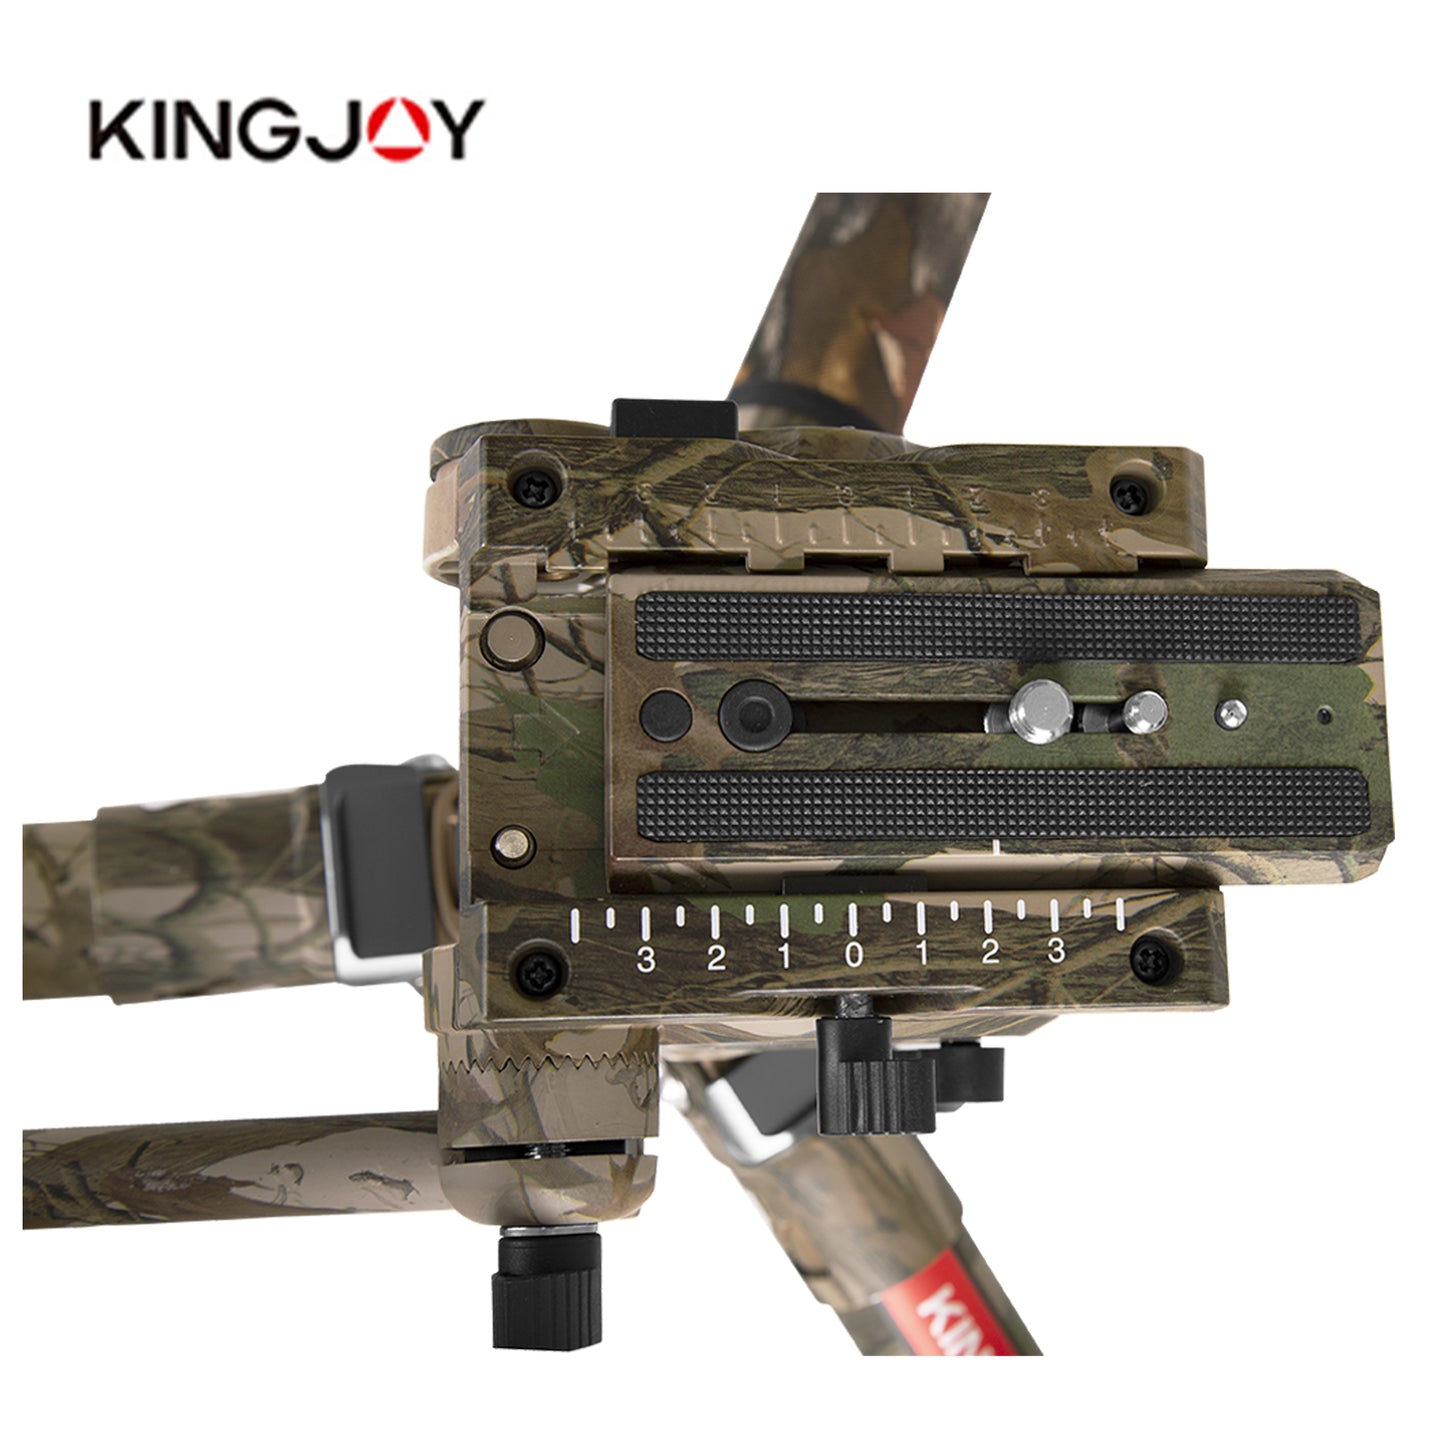 Kingjoy C86M camouflage carbon fiber tripod-4 section, bird shooting, wildlife photography, C86 upgraded